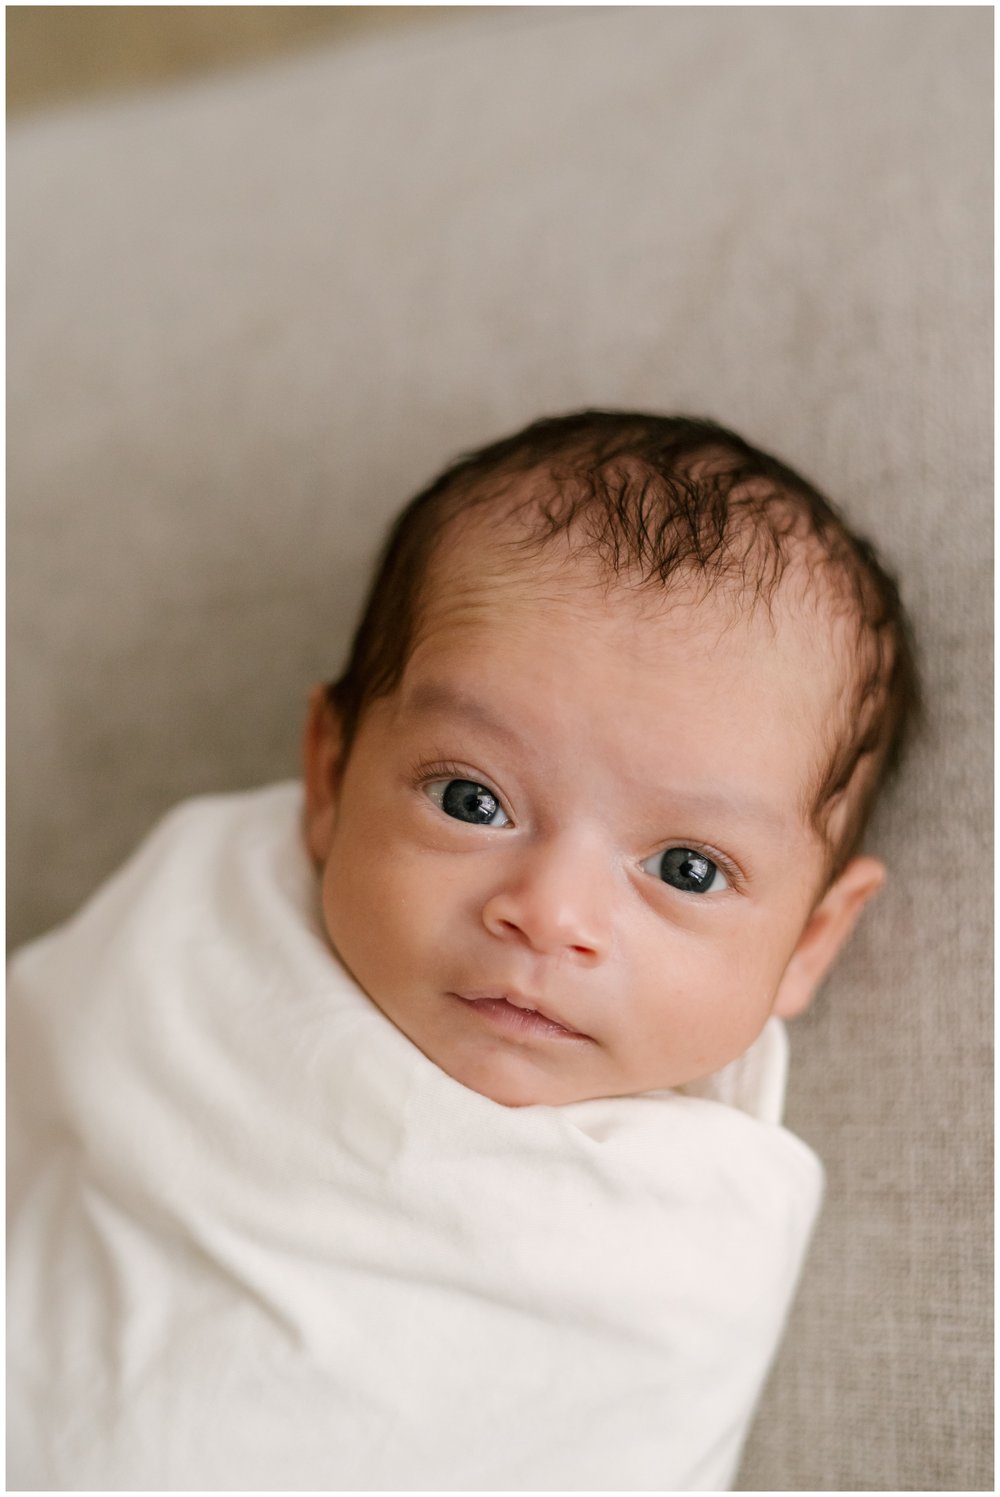 Newborn looking at camera | NKB Photo | Hospital Bag Checklist for Baby